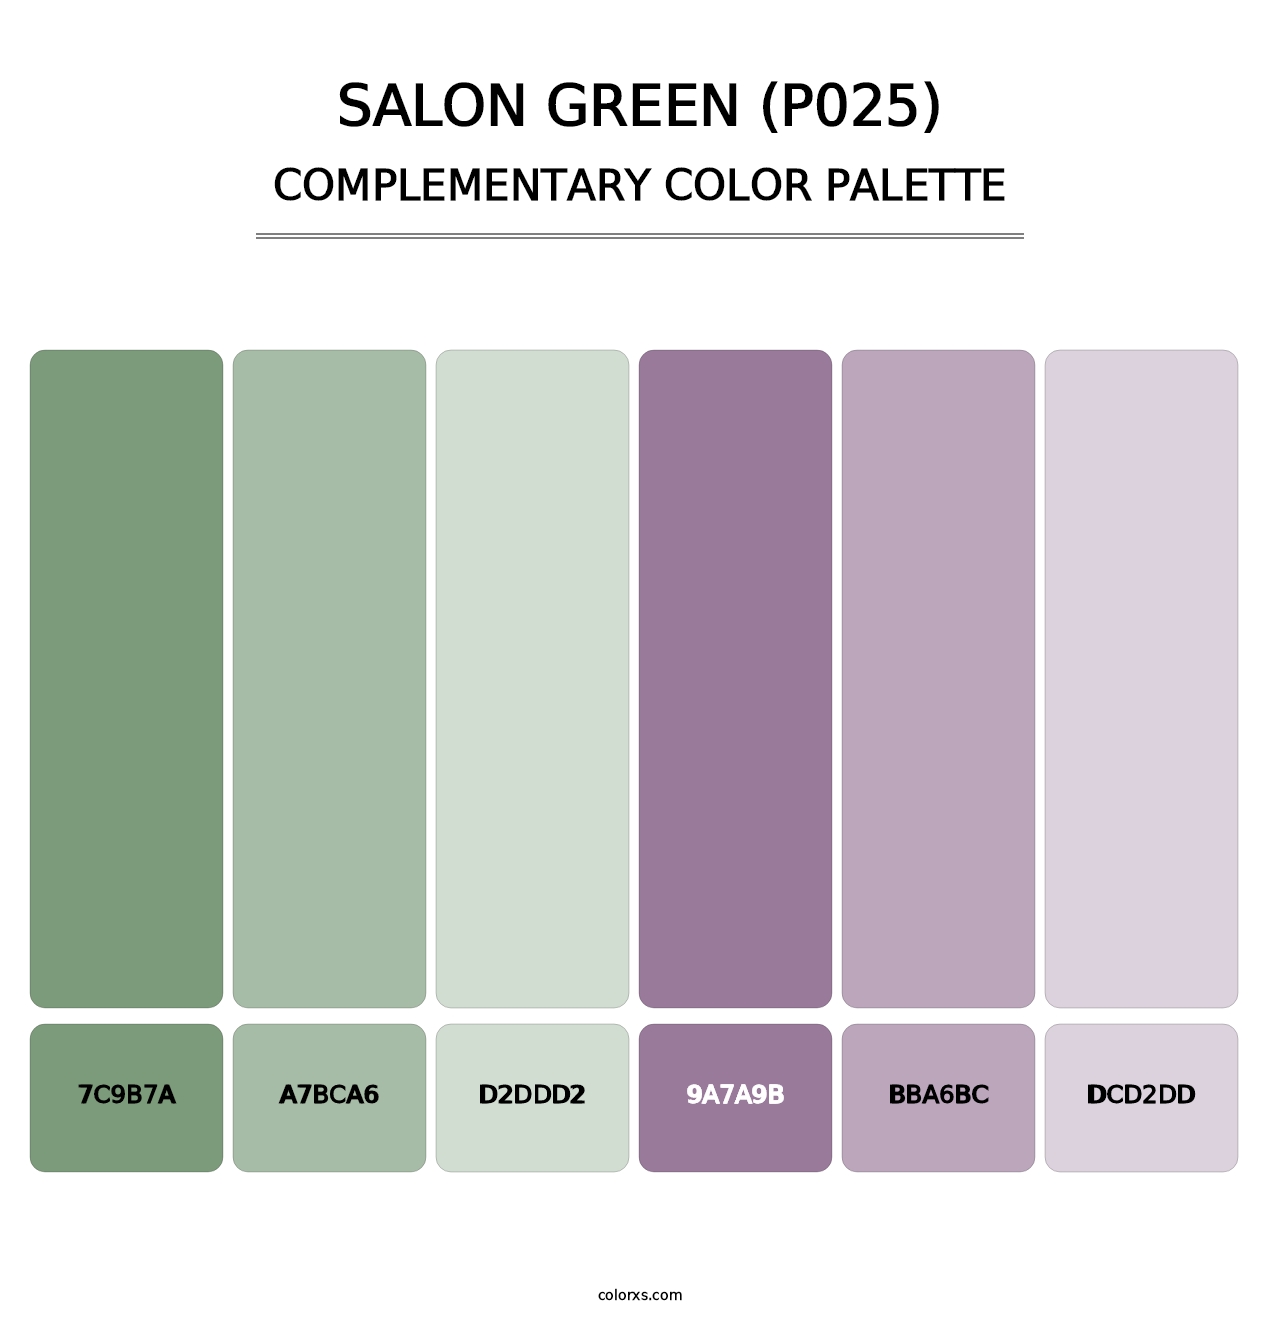 Salon Green (P025) - Complementary Color Palette